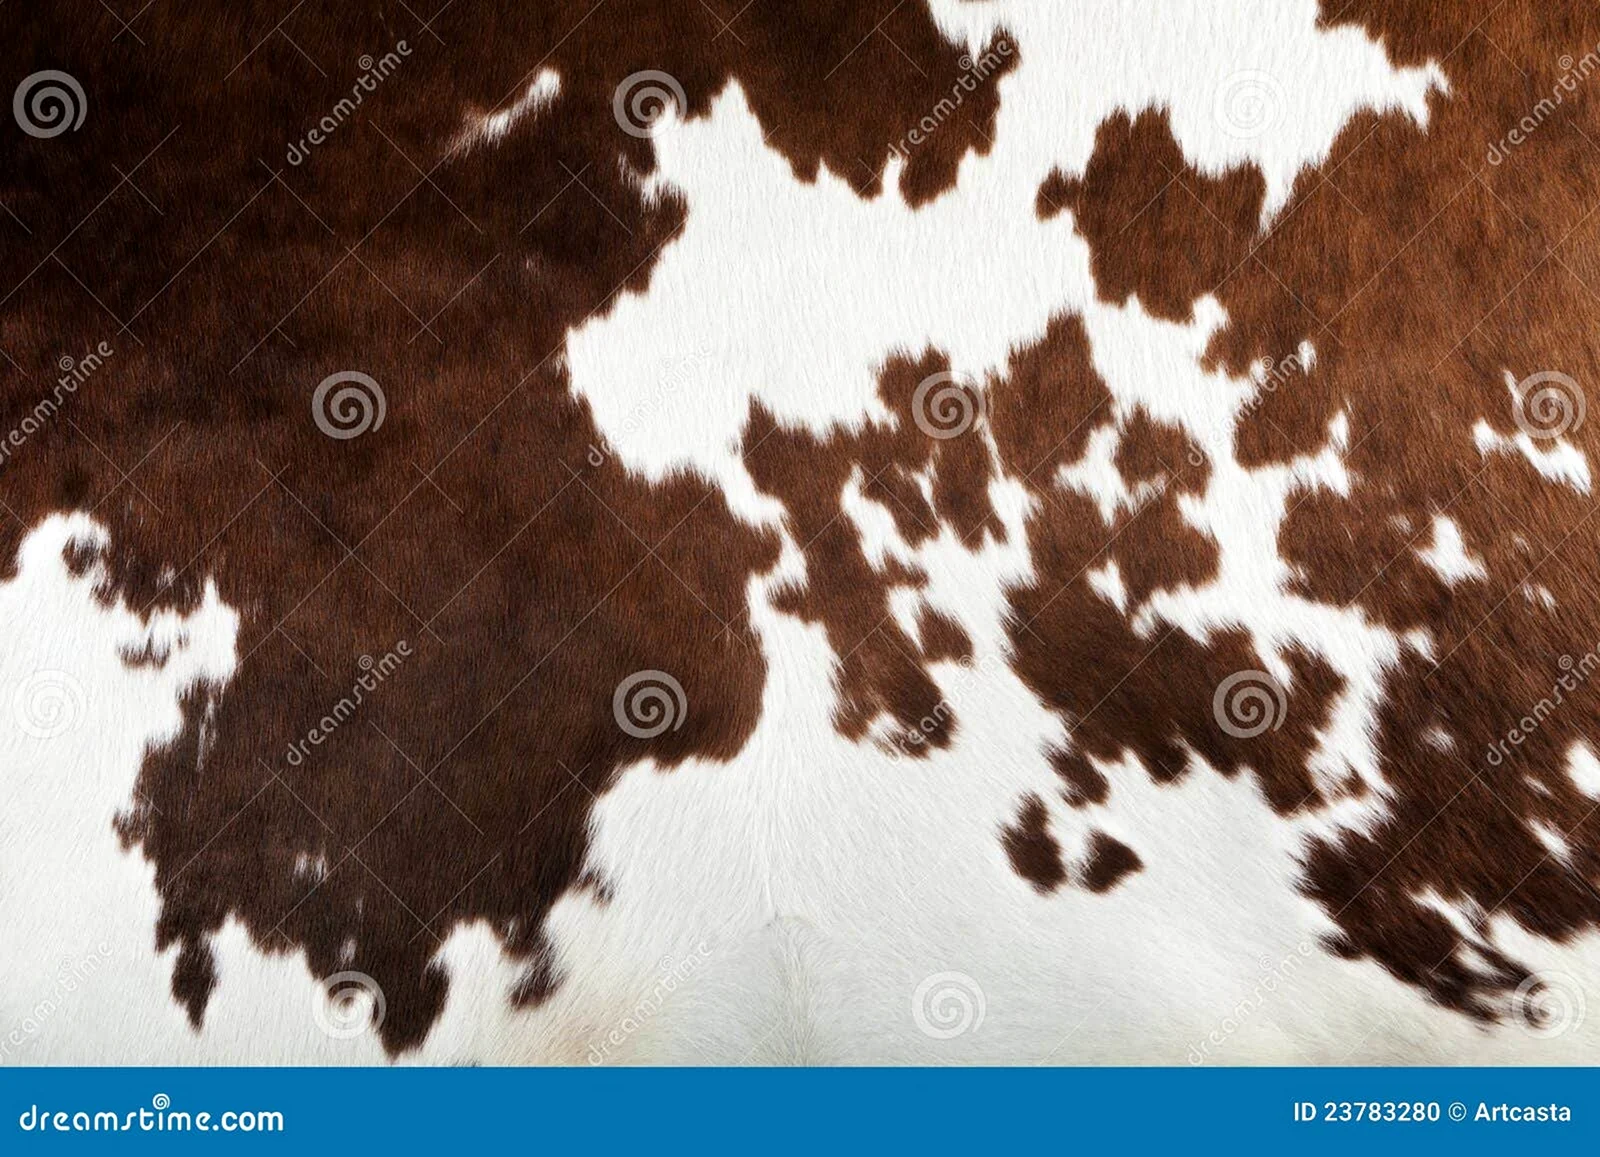 Коровья шкура текстура